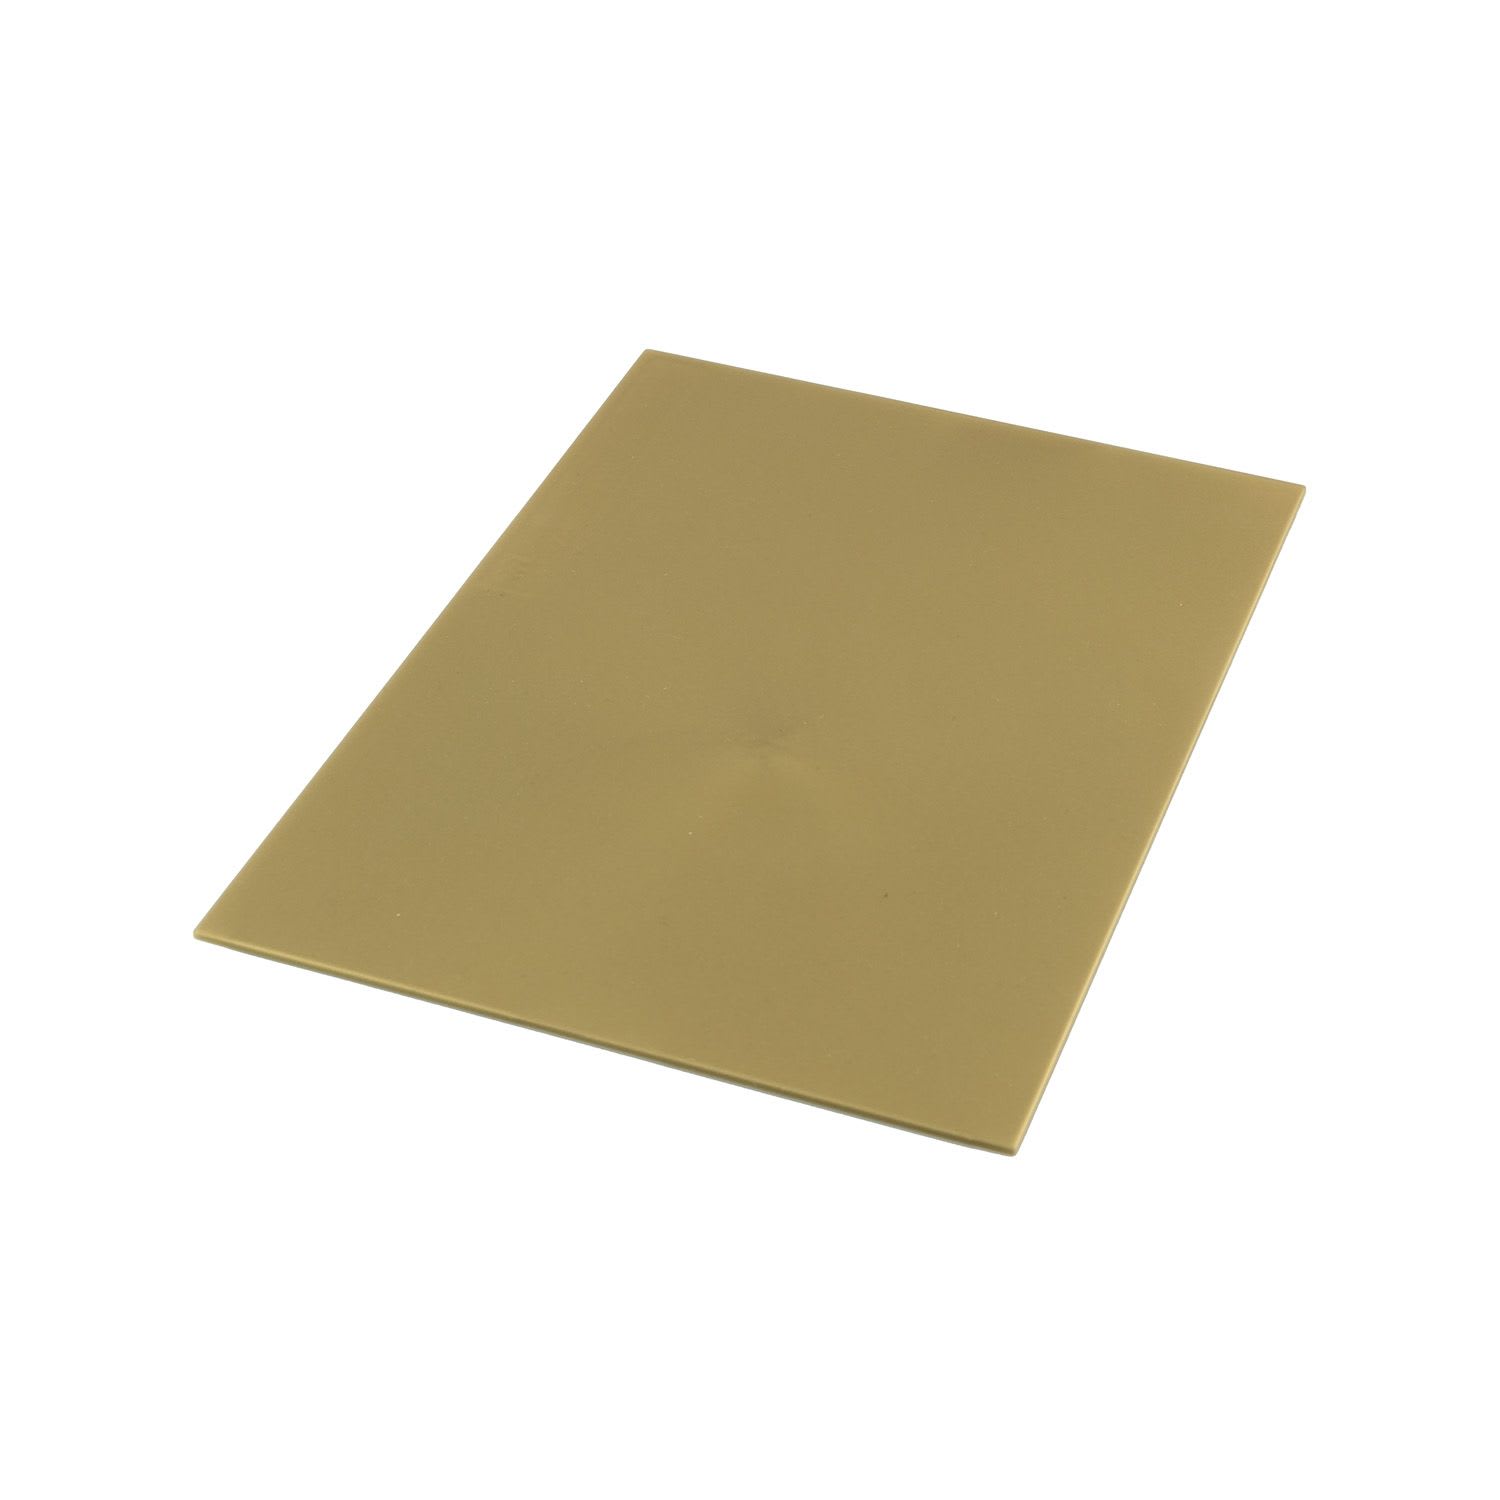 SILIKOMART 25.074.63.0065 Diamond BUCHE-Plastic Support and 2 Silicone  mats, White